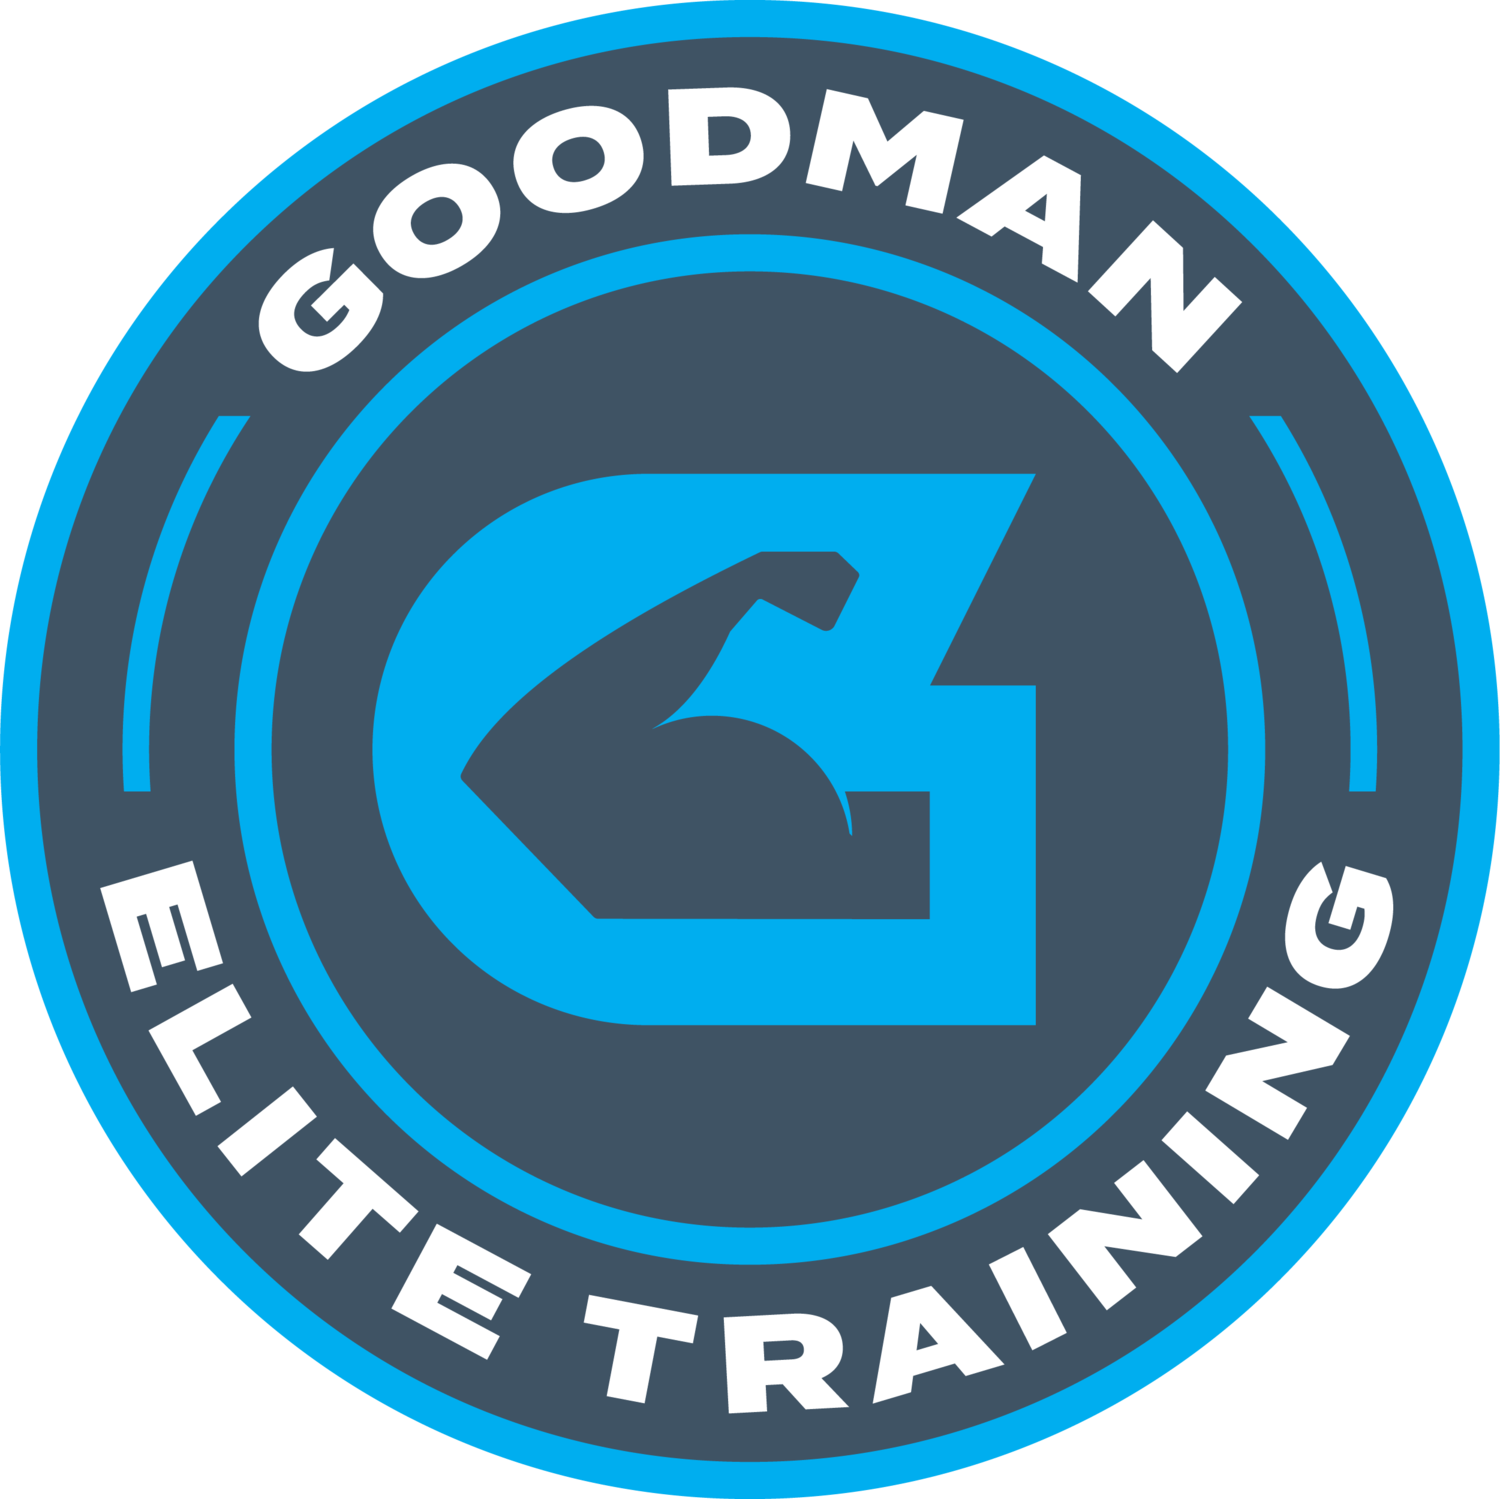 Goodman Elite Training